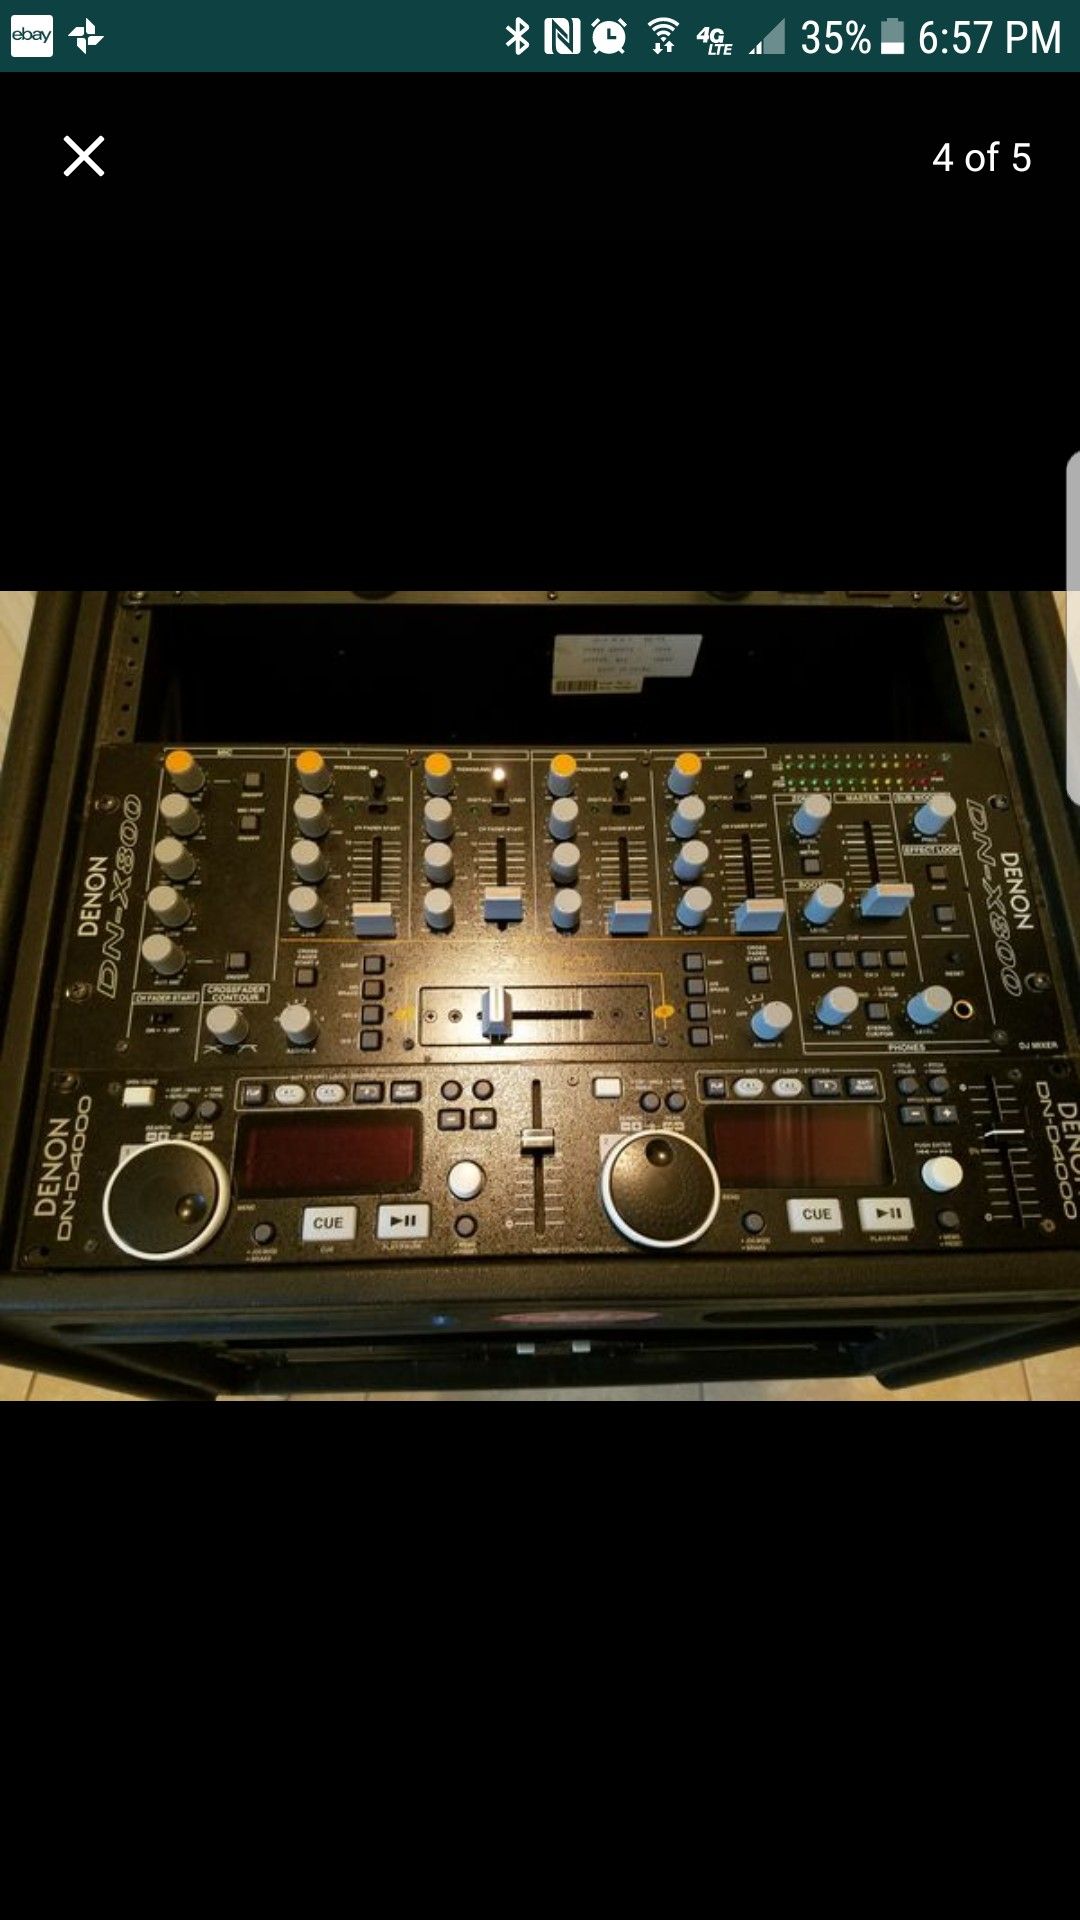 DJ Equipment , Denon Mixer & Speakers.Not Pioneer, Numark or Gemini. Equipo Música DJ